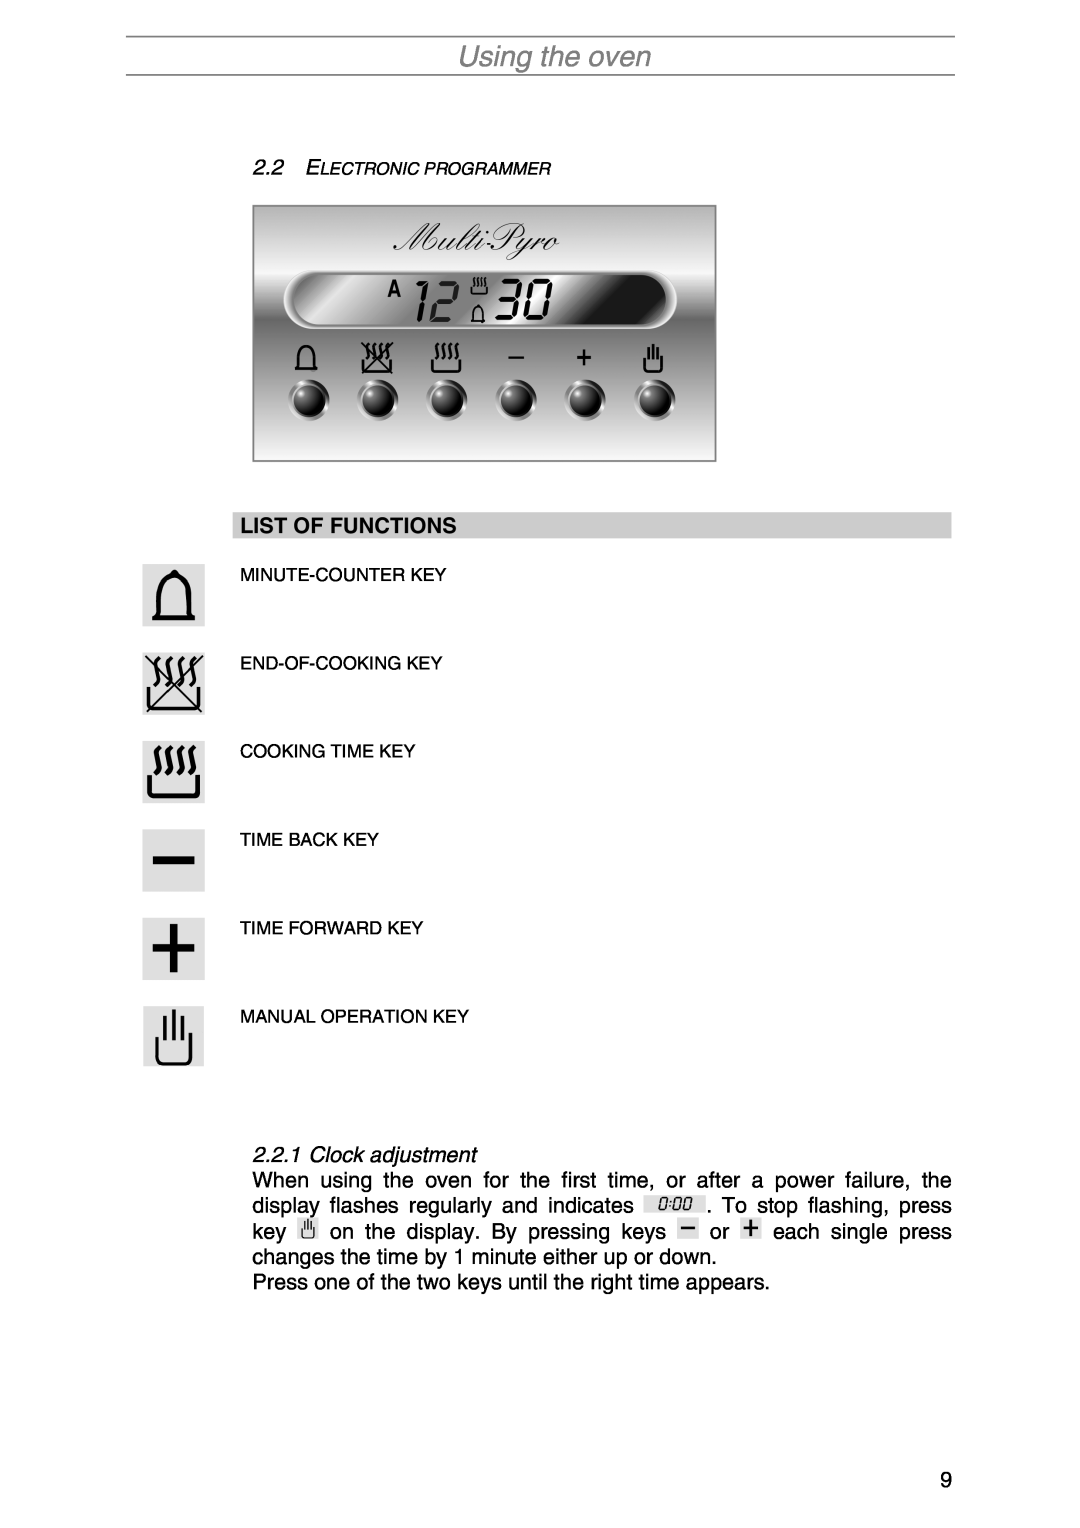 Smeg SA1010X-5 manual List Of Functions, Clock adjustment, Using the oven 